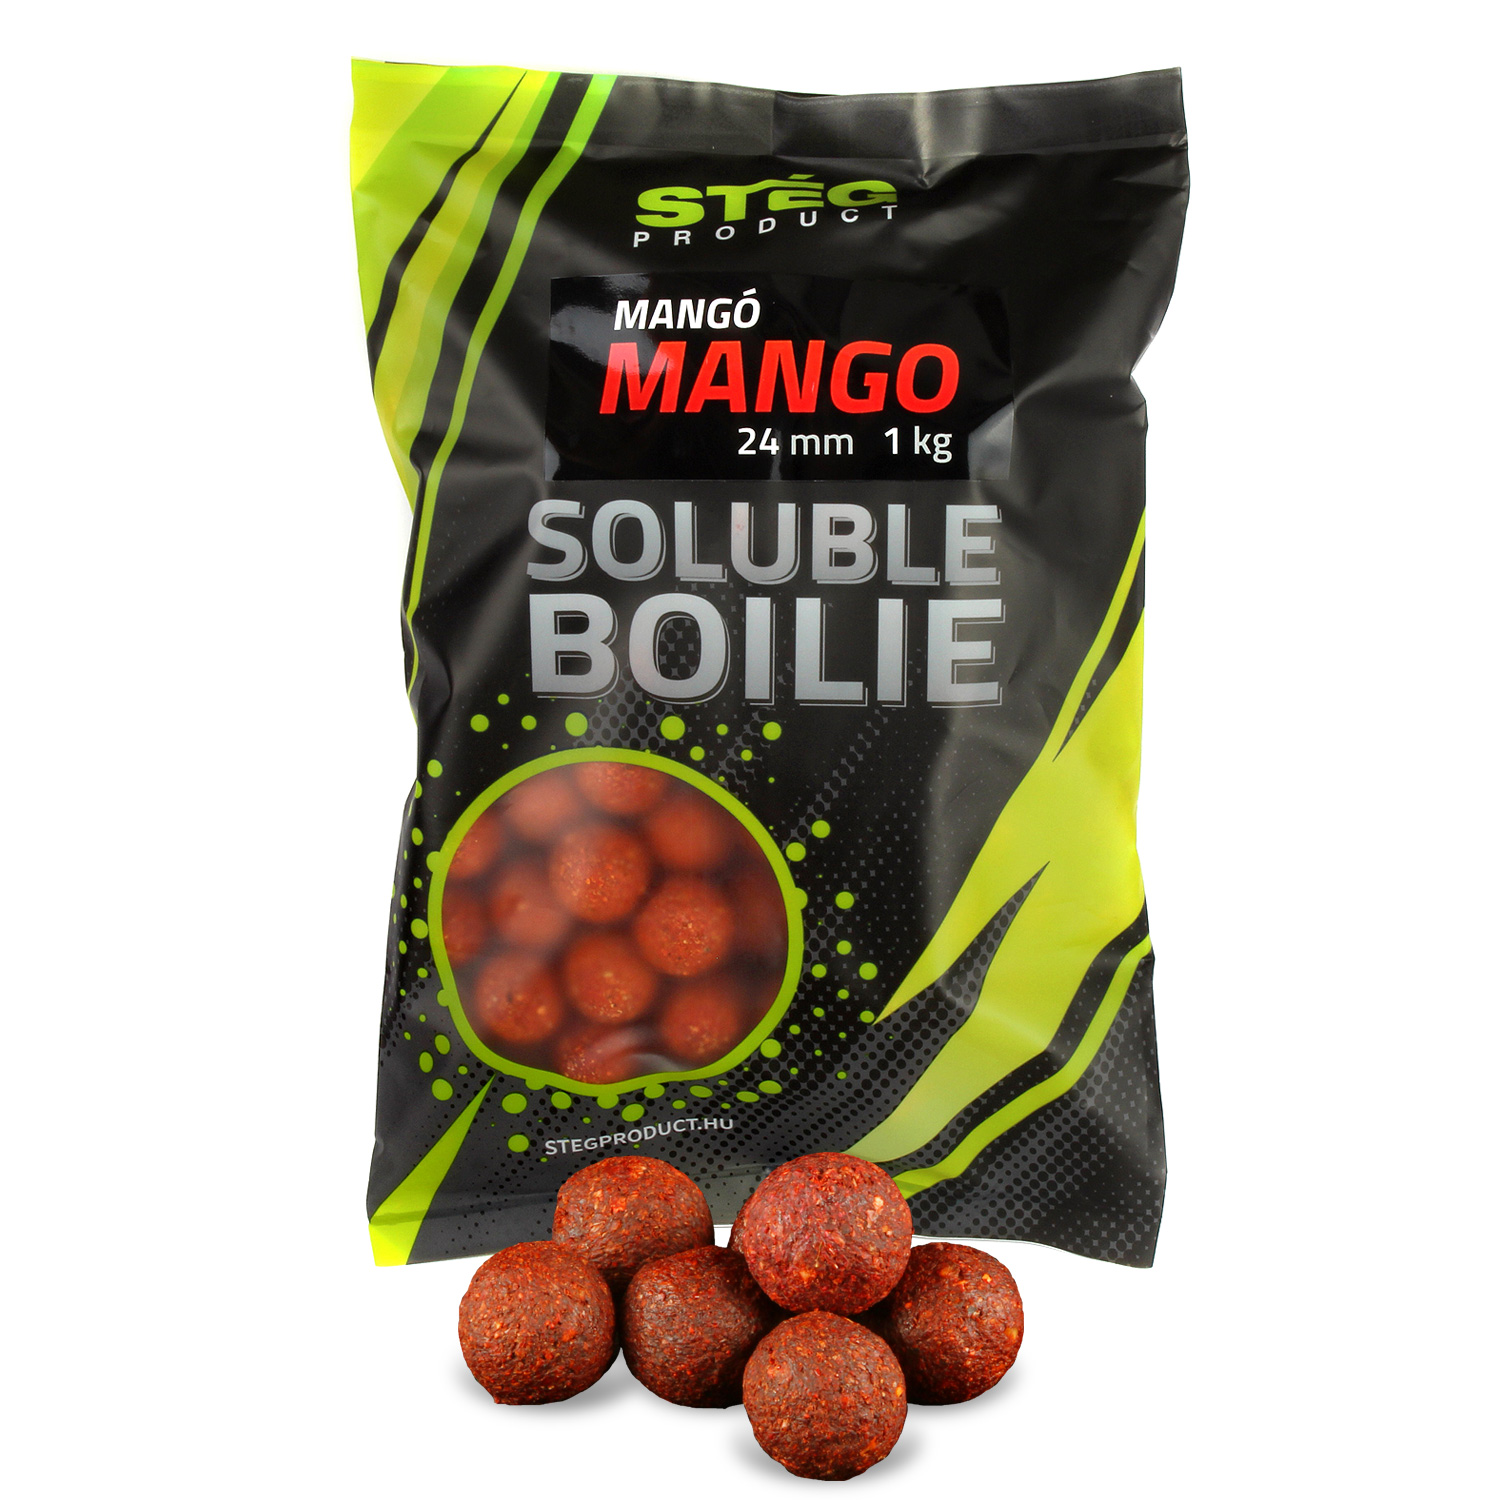 Stg Product Soluble Boilie 24mm Mango 1kg